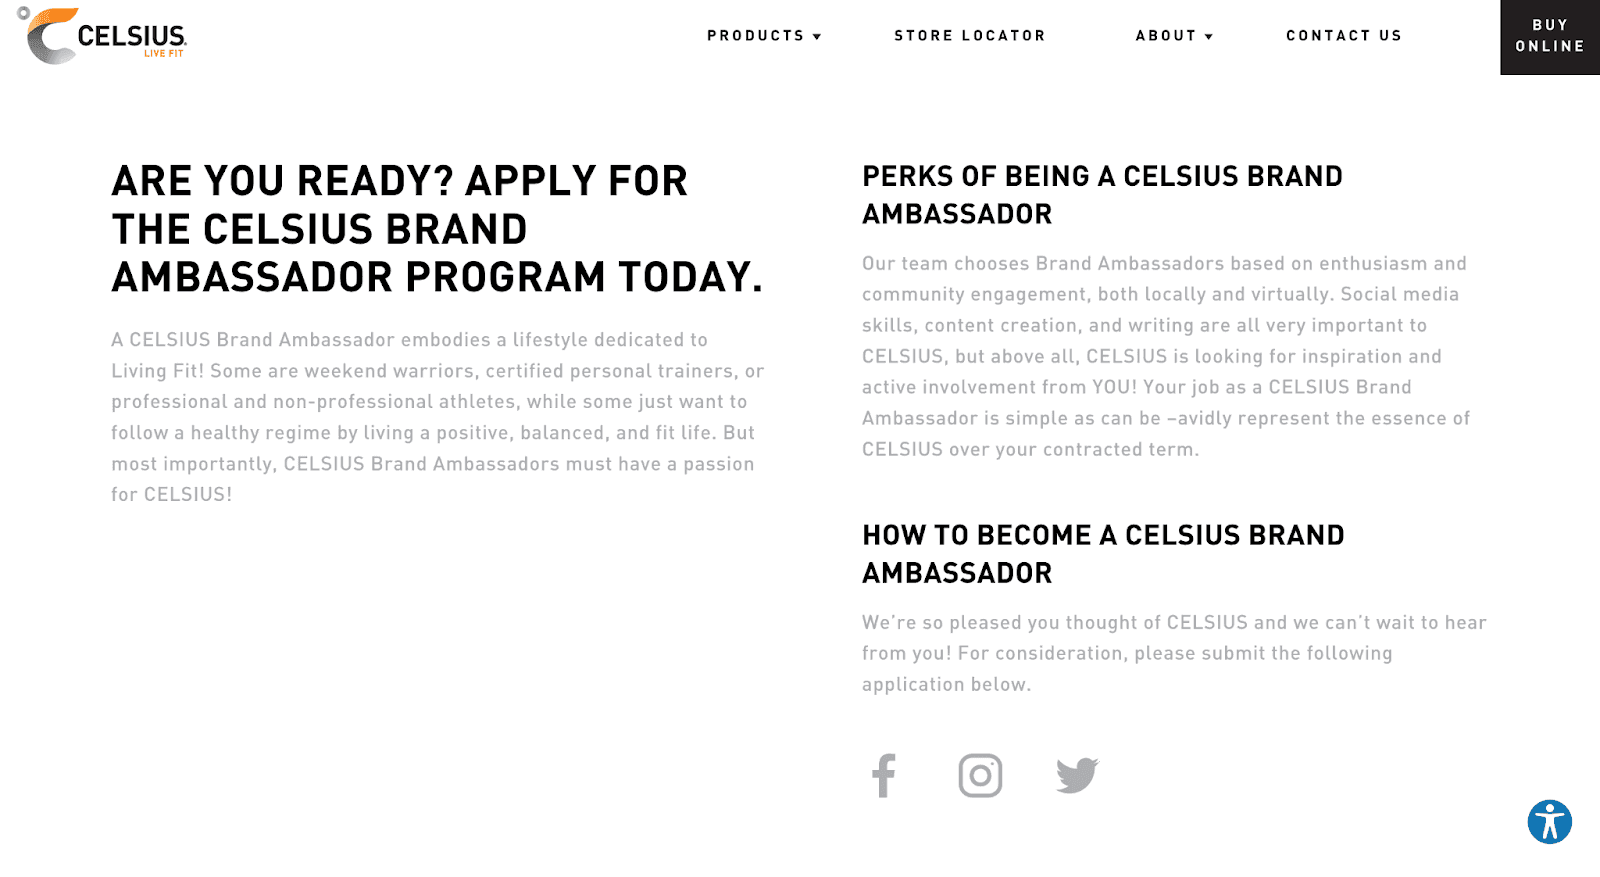 Celcius Brand ambassador program